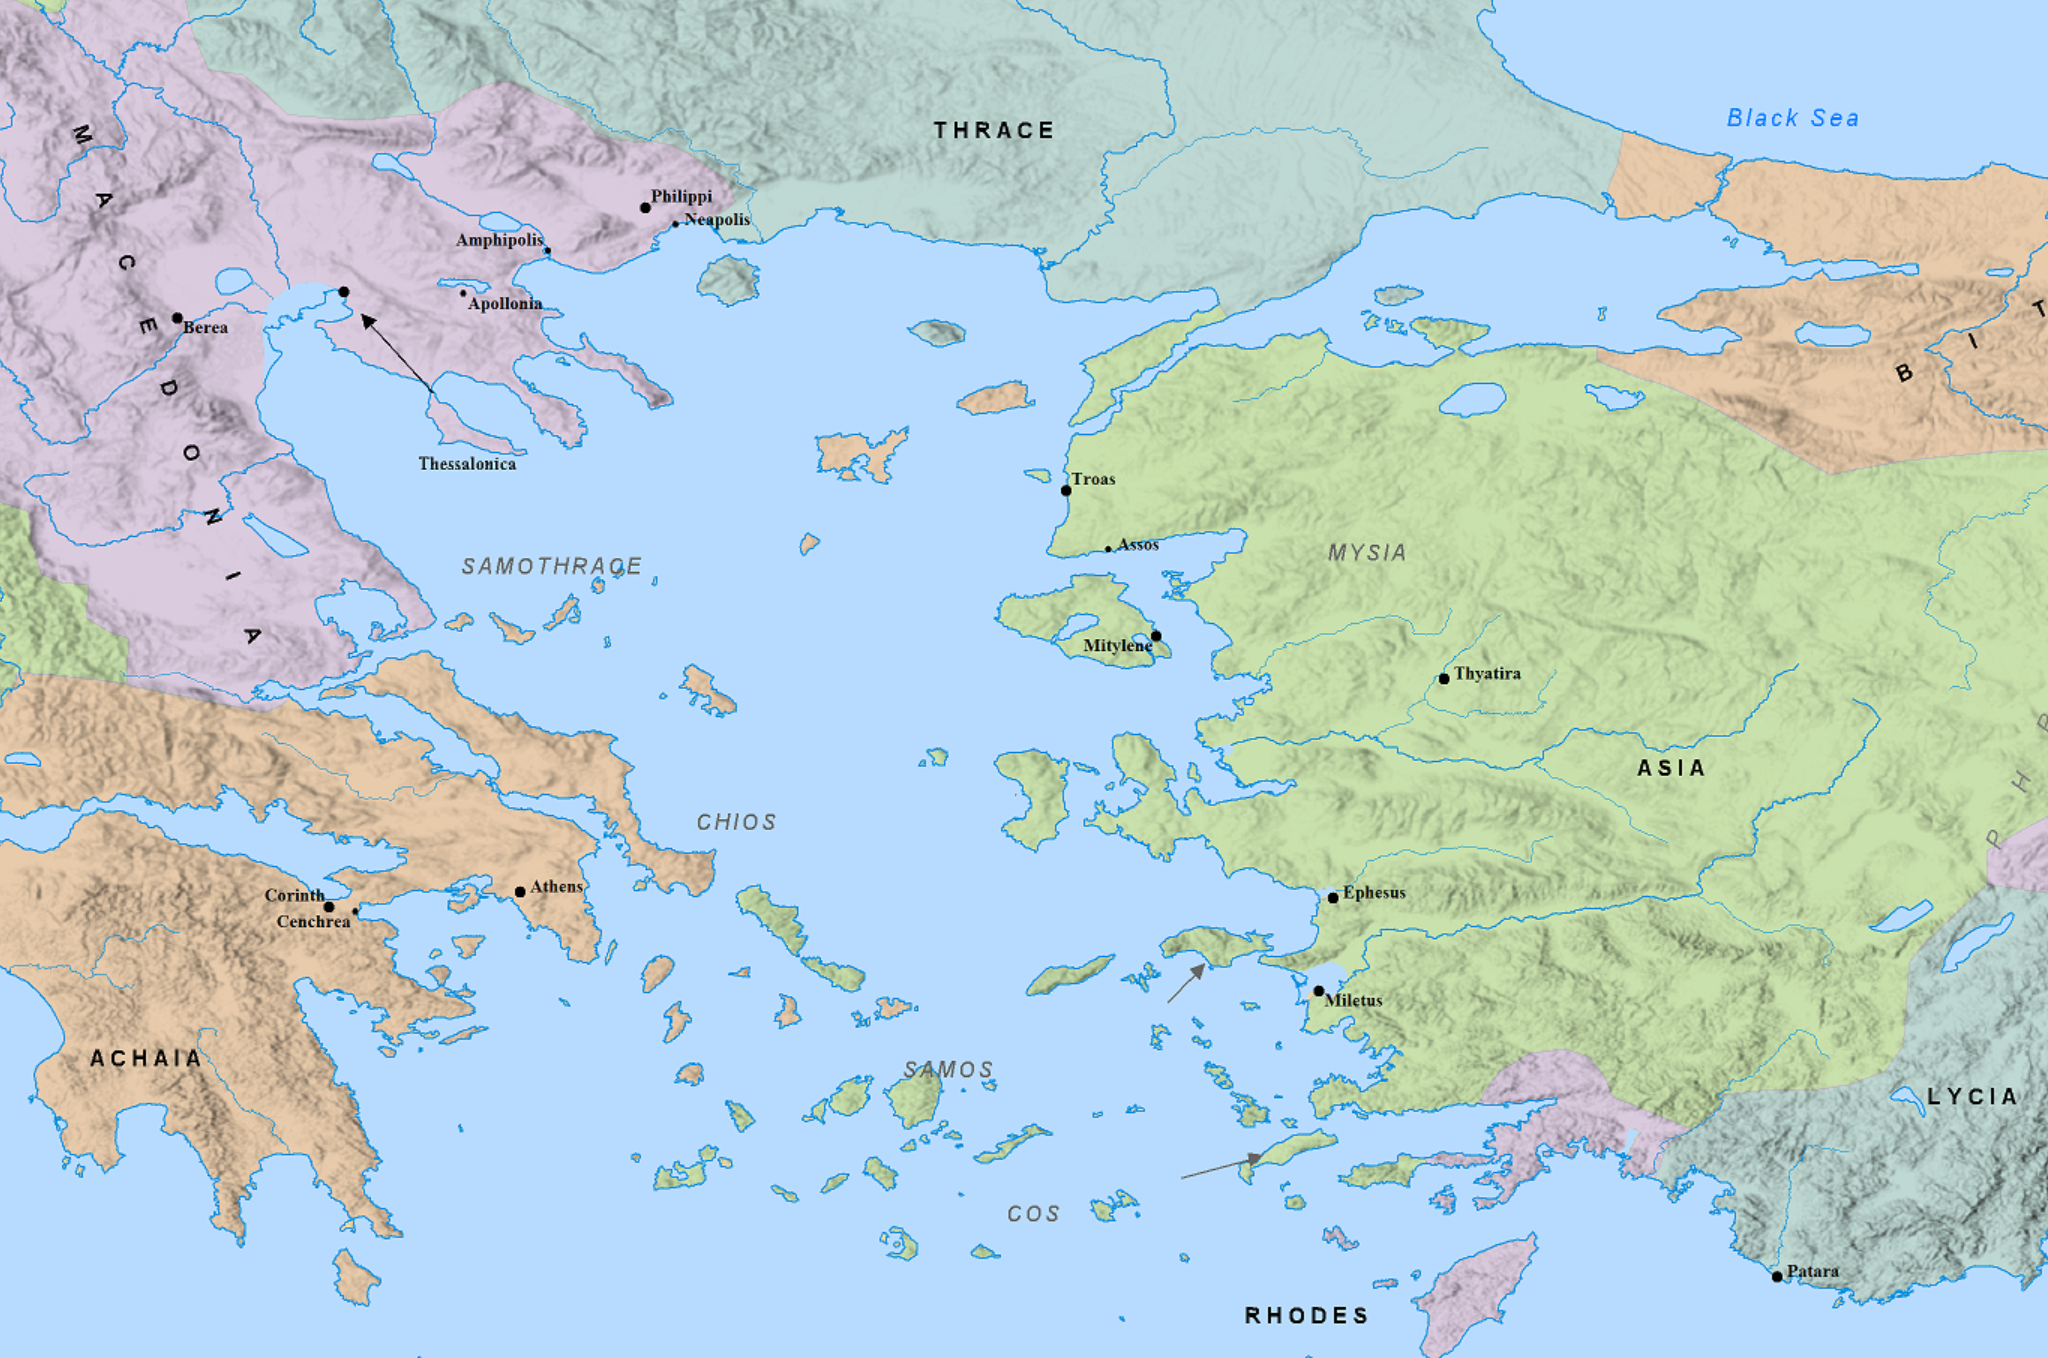 Macedonia to Asia Through Trace